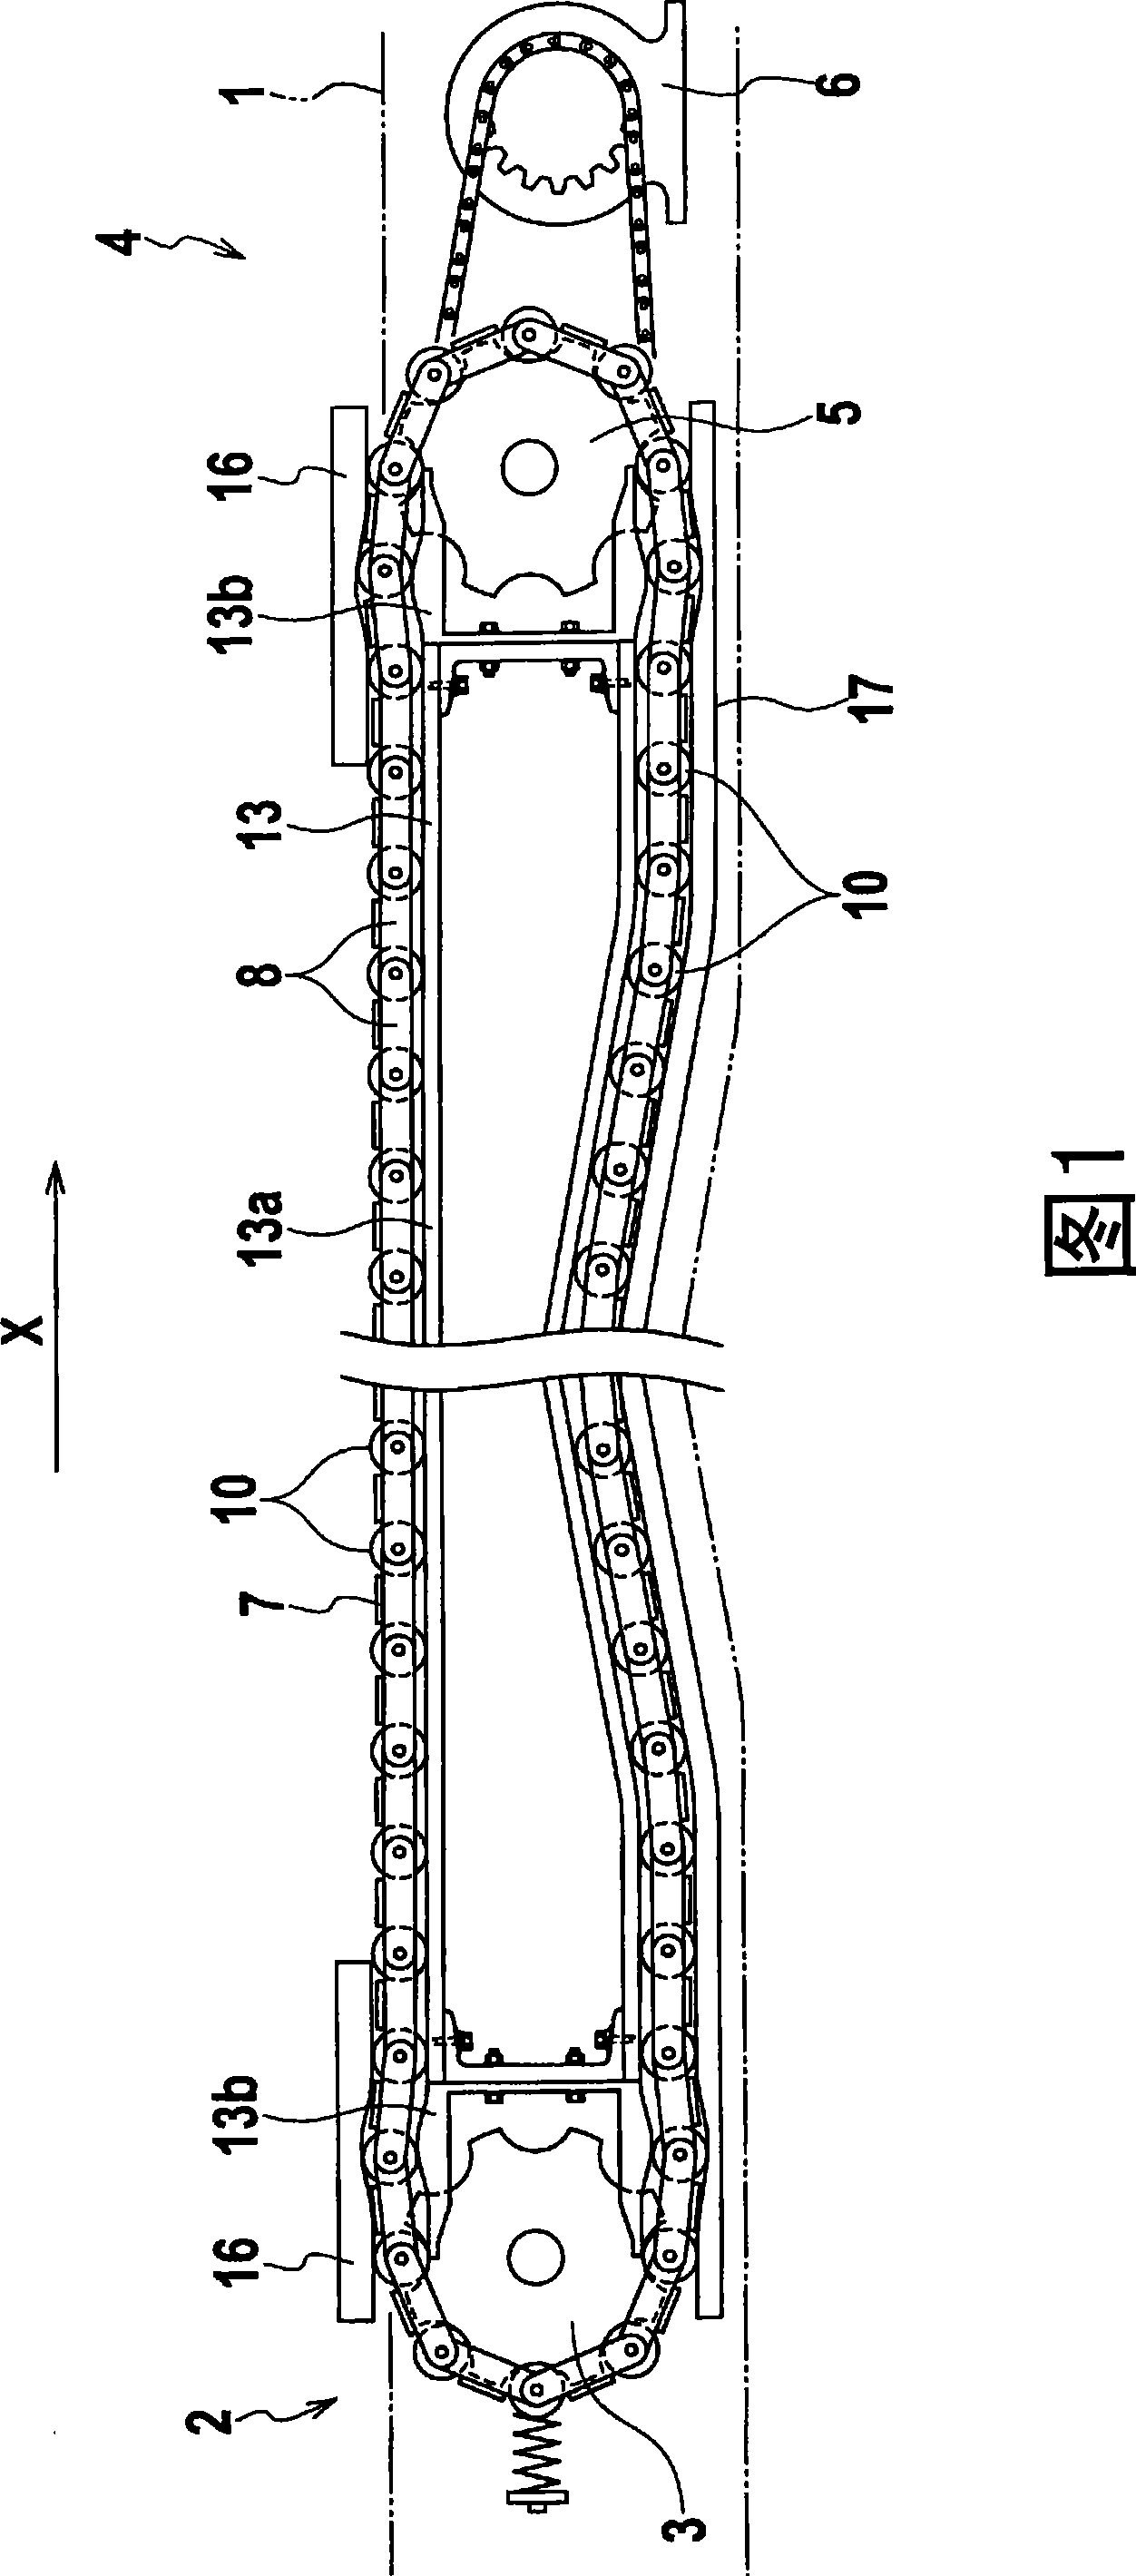 Passenger conveyor device